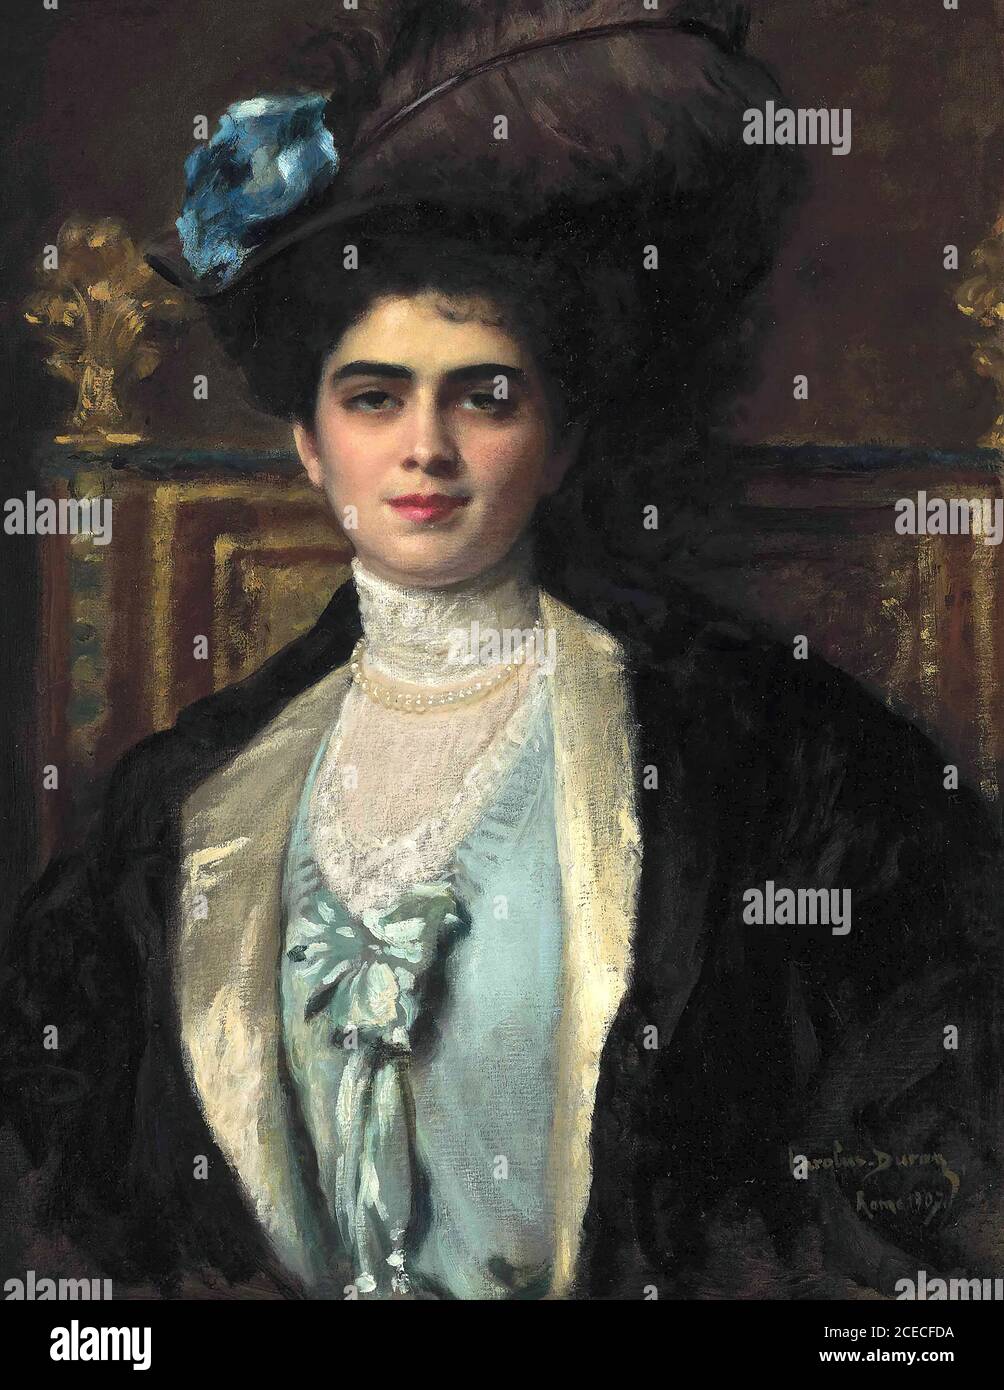 Carolus-Duran - Madame Lafourcade née Cortira a la Havane - Scuola di francese - 19 ° secolo Foto Stock